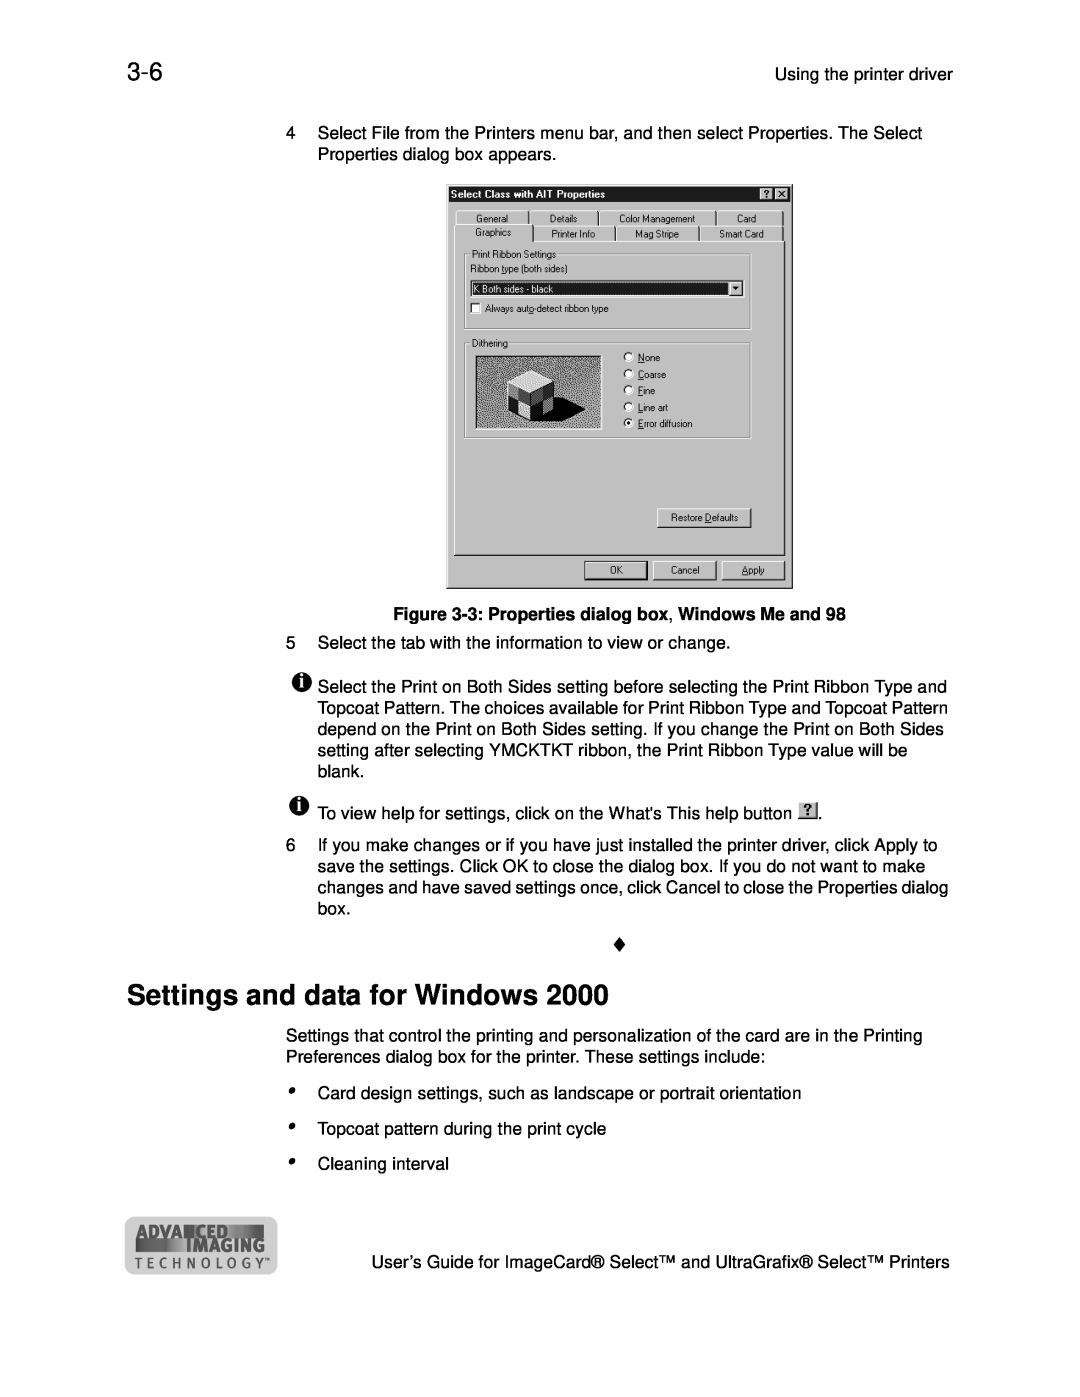 Datacard Group ImageCard SelectTM and UltraGrafix SelectTM Printers manual Settings and data for Windows 